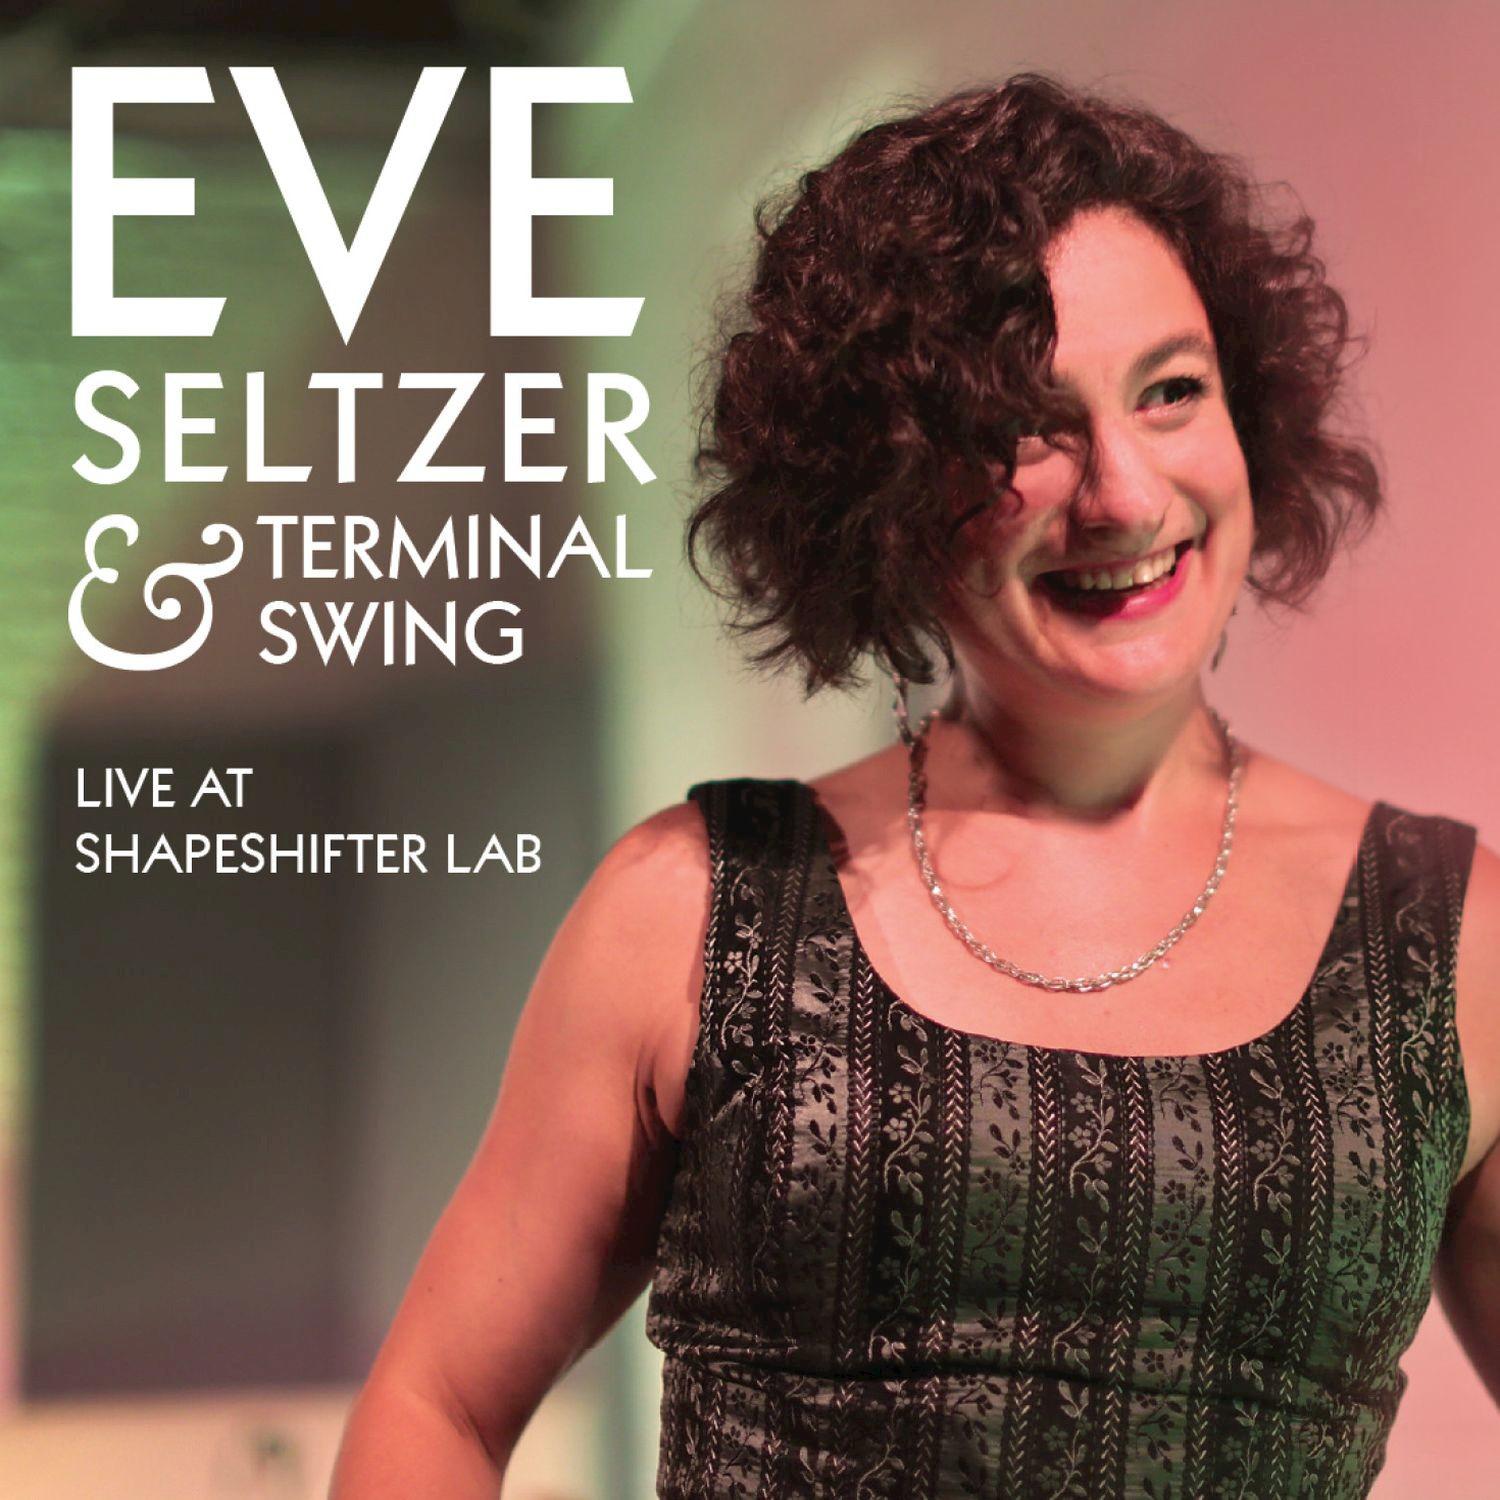 vip单曲 歌手:eve seltzer 所属专辑:eve seltzer & terminal swing